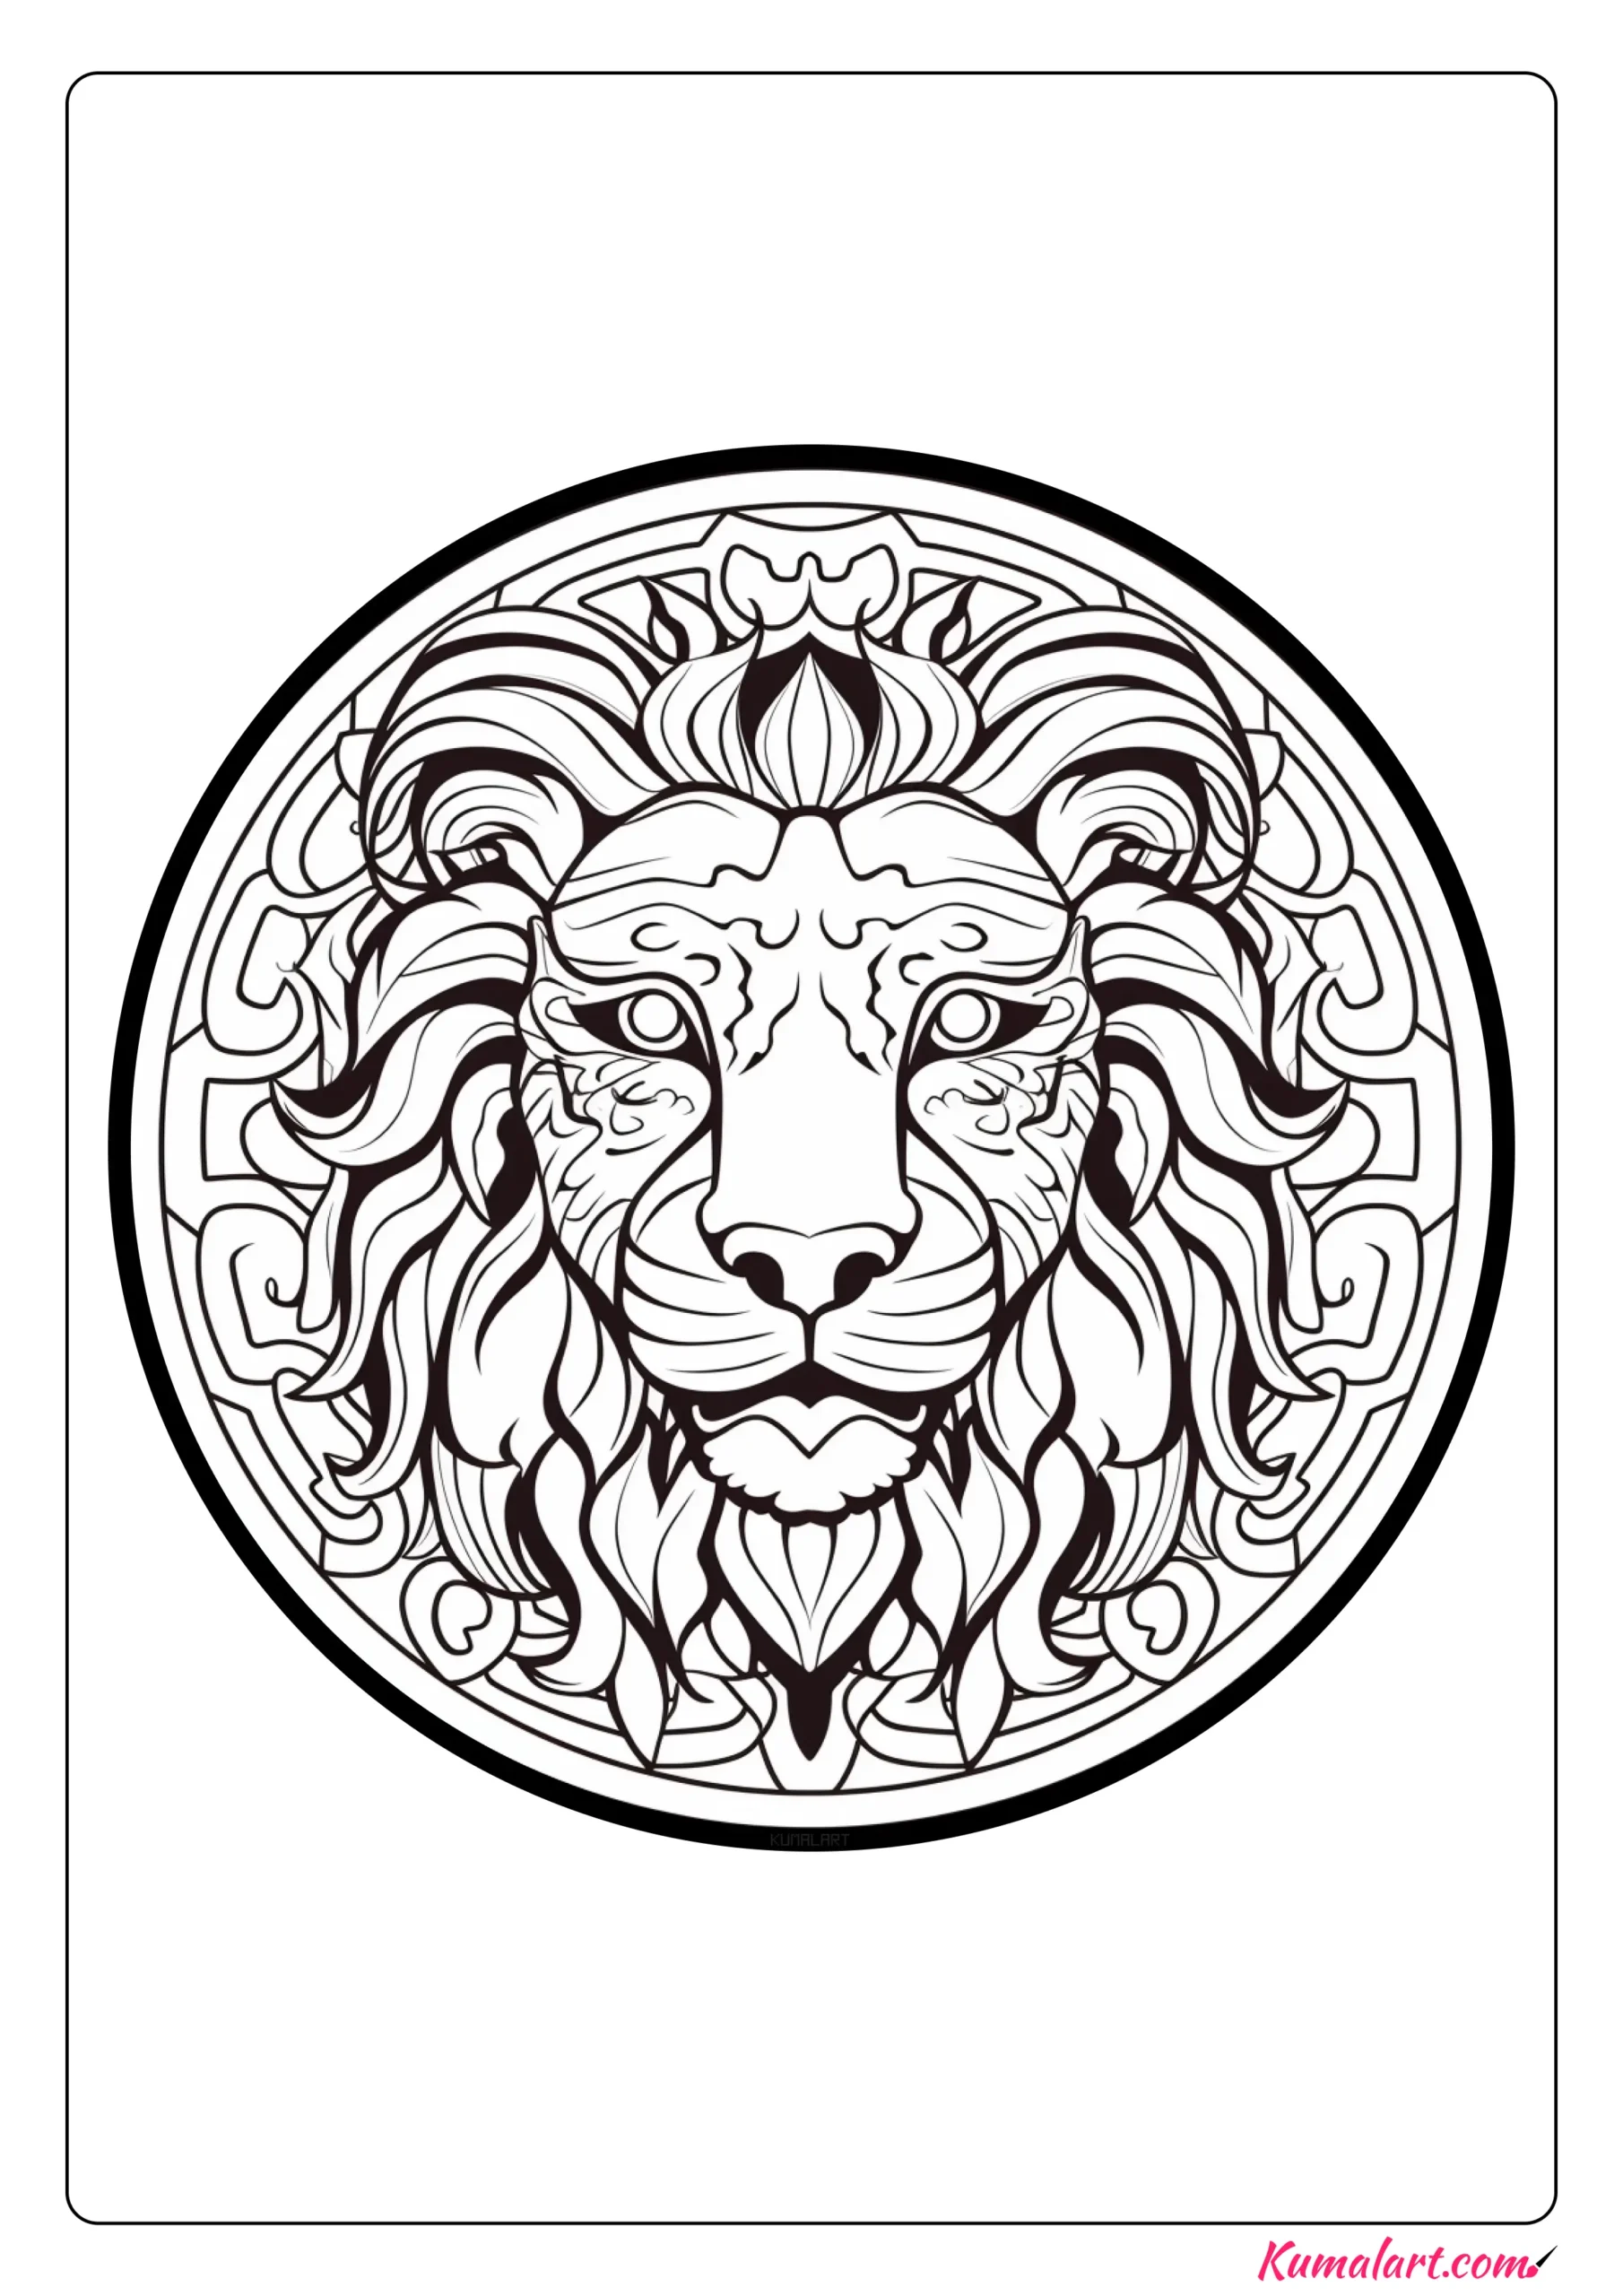 Felix the Lion Mandala Coloring Page